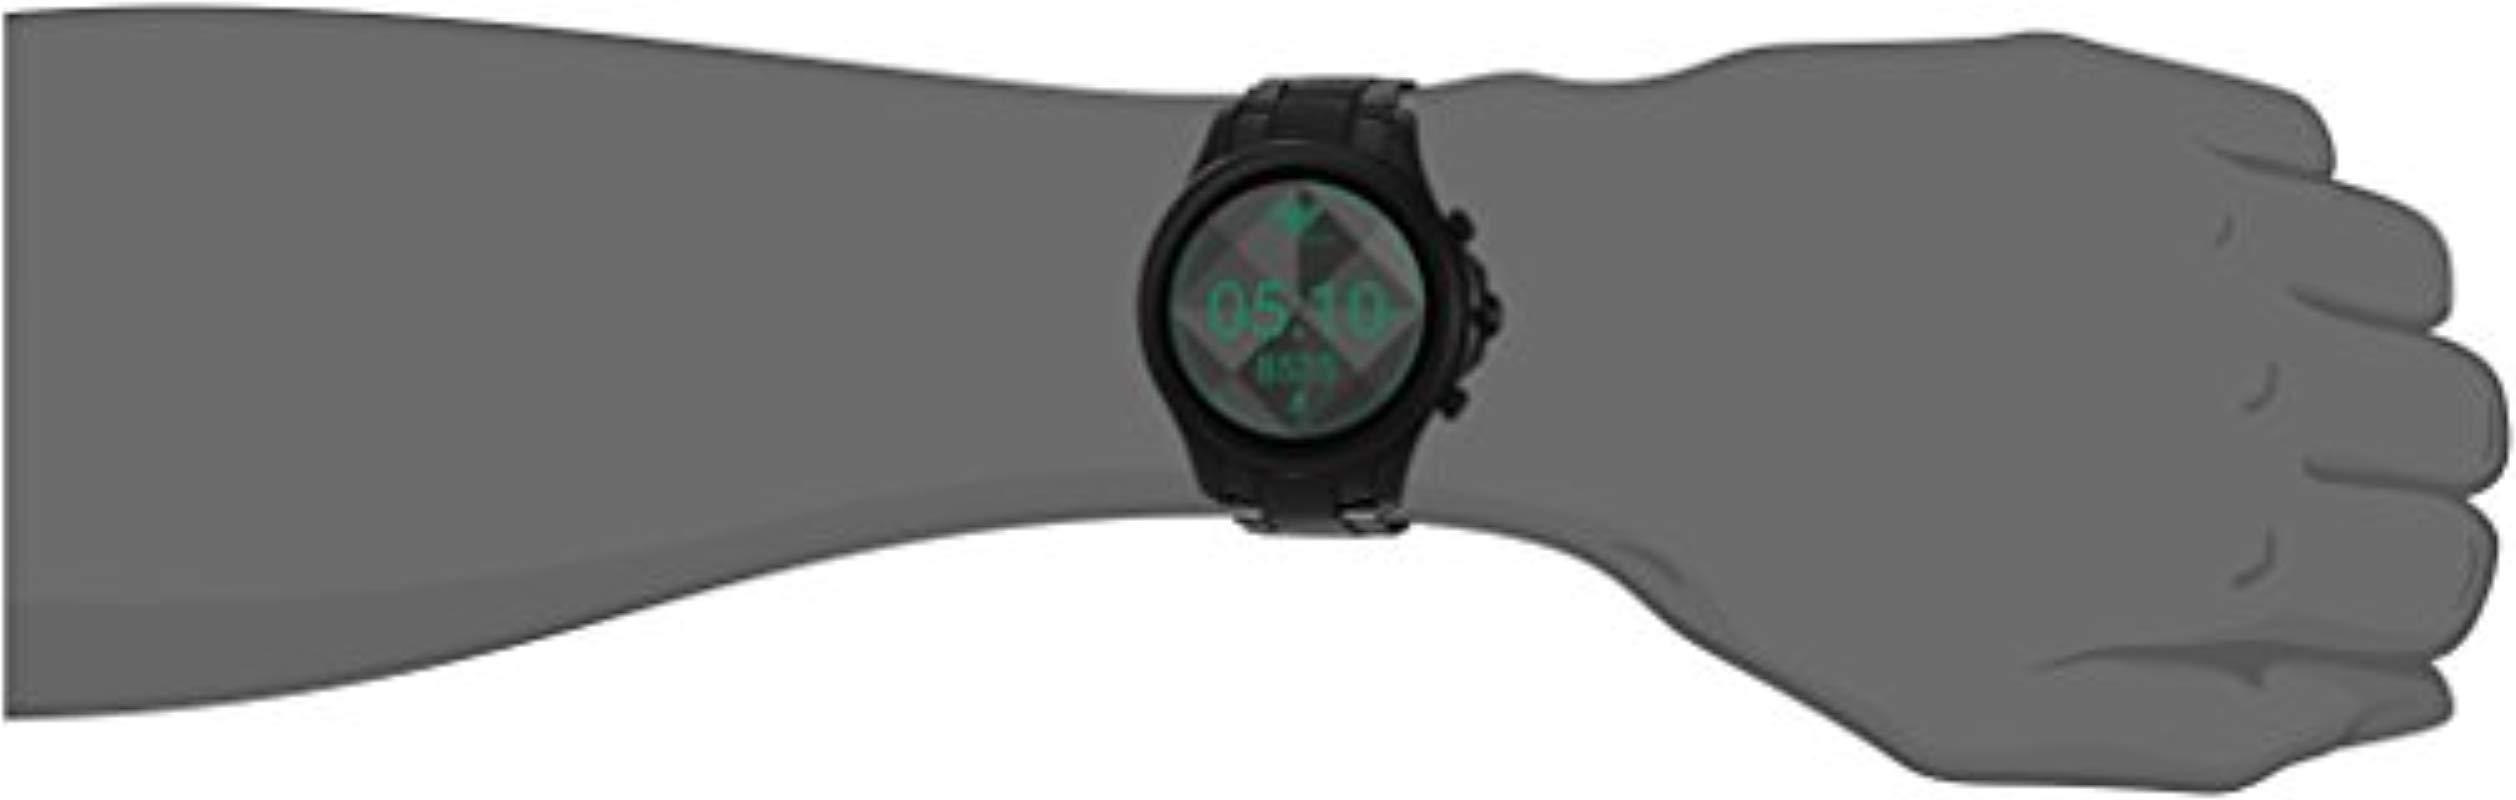 armani smartwatch art5002